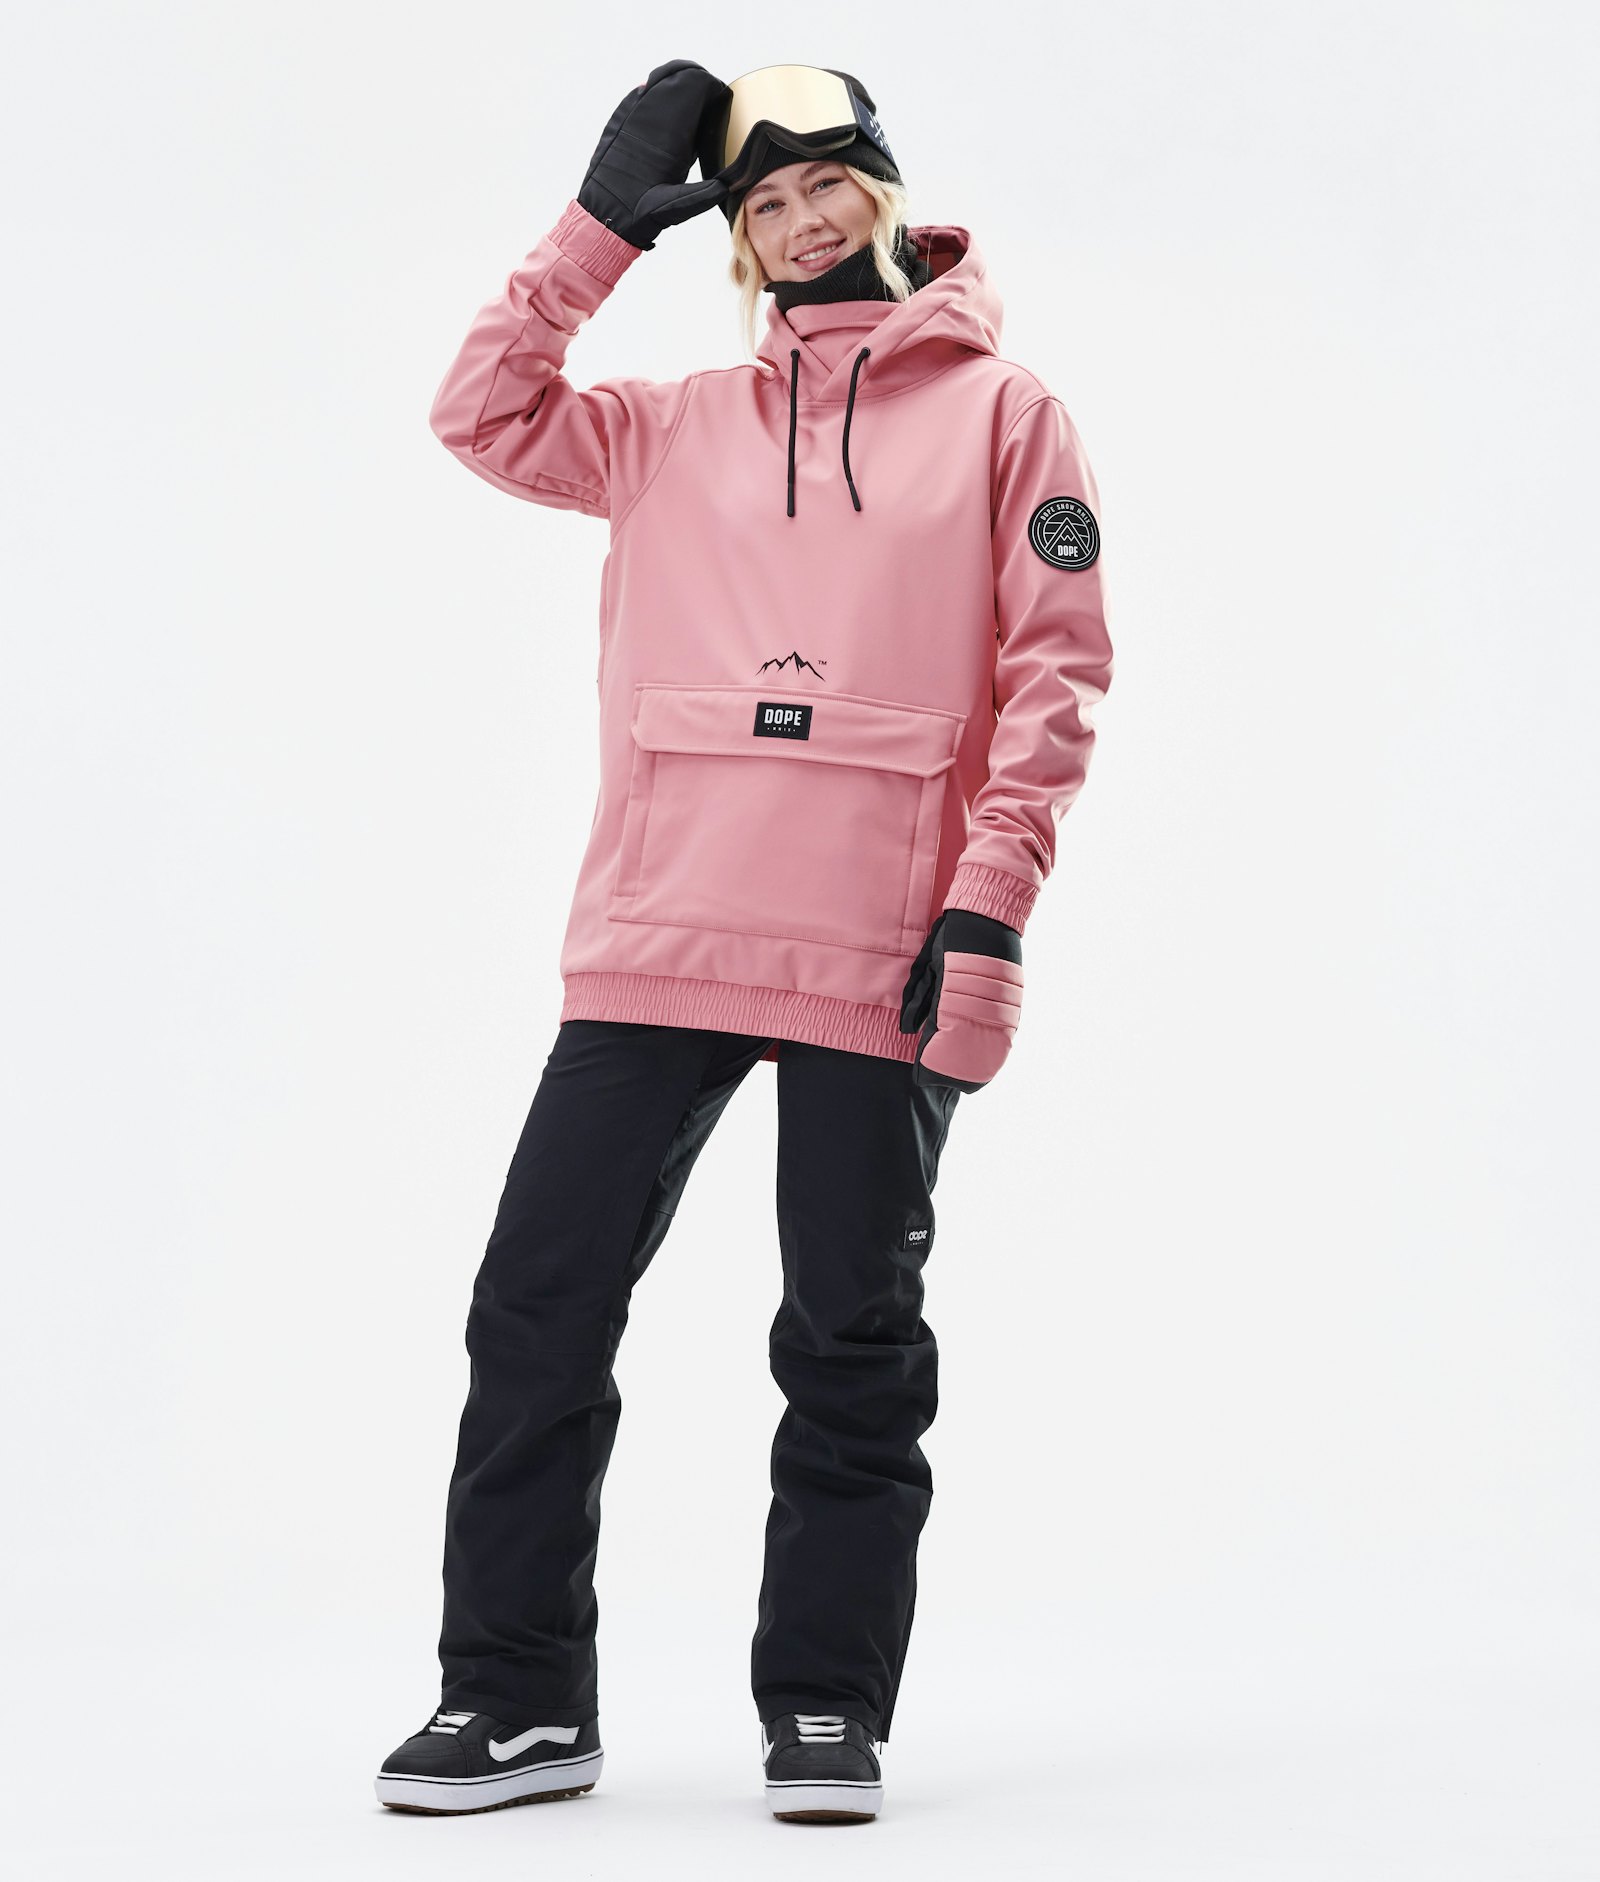 Wylie W 10k Veste Snowboard Femme Patch Pink